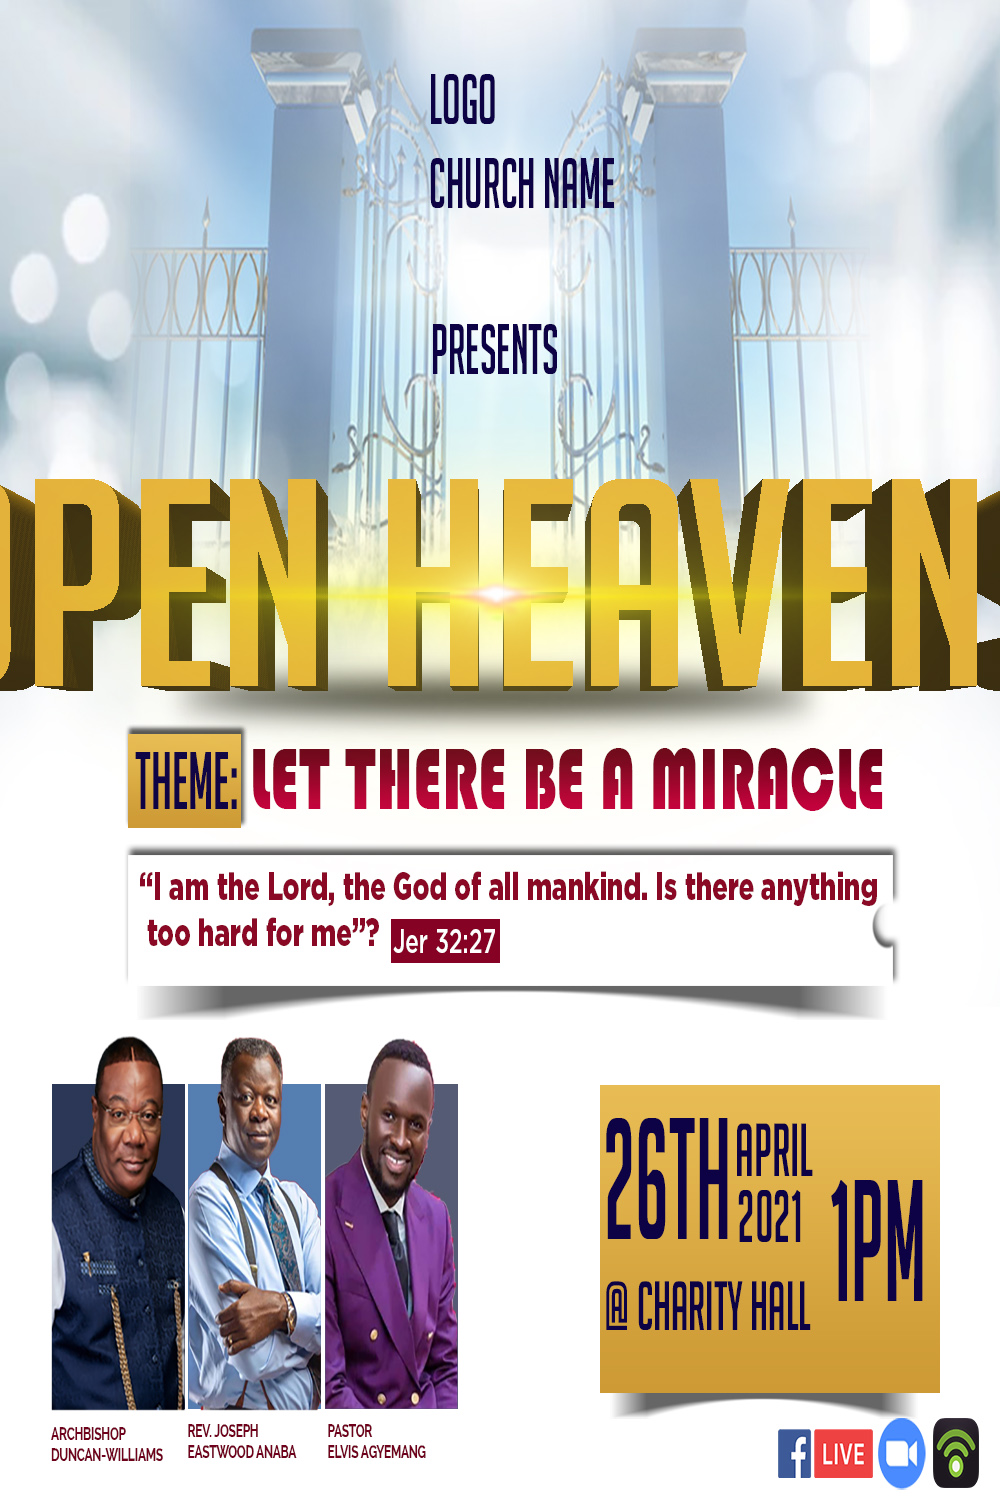 Open Heavens Church Flyer Design pinterest image.